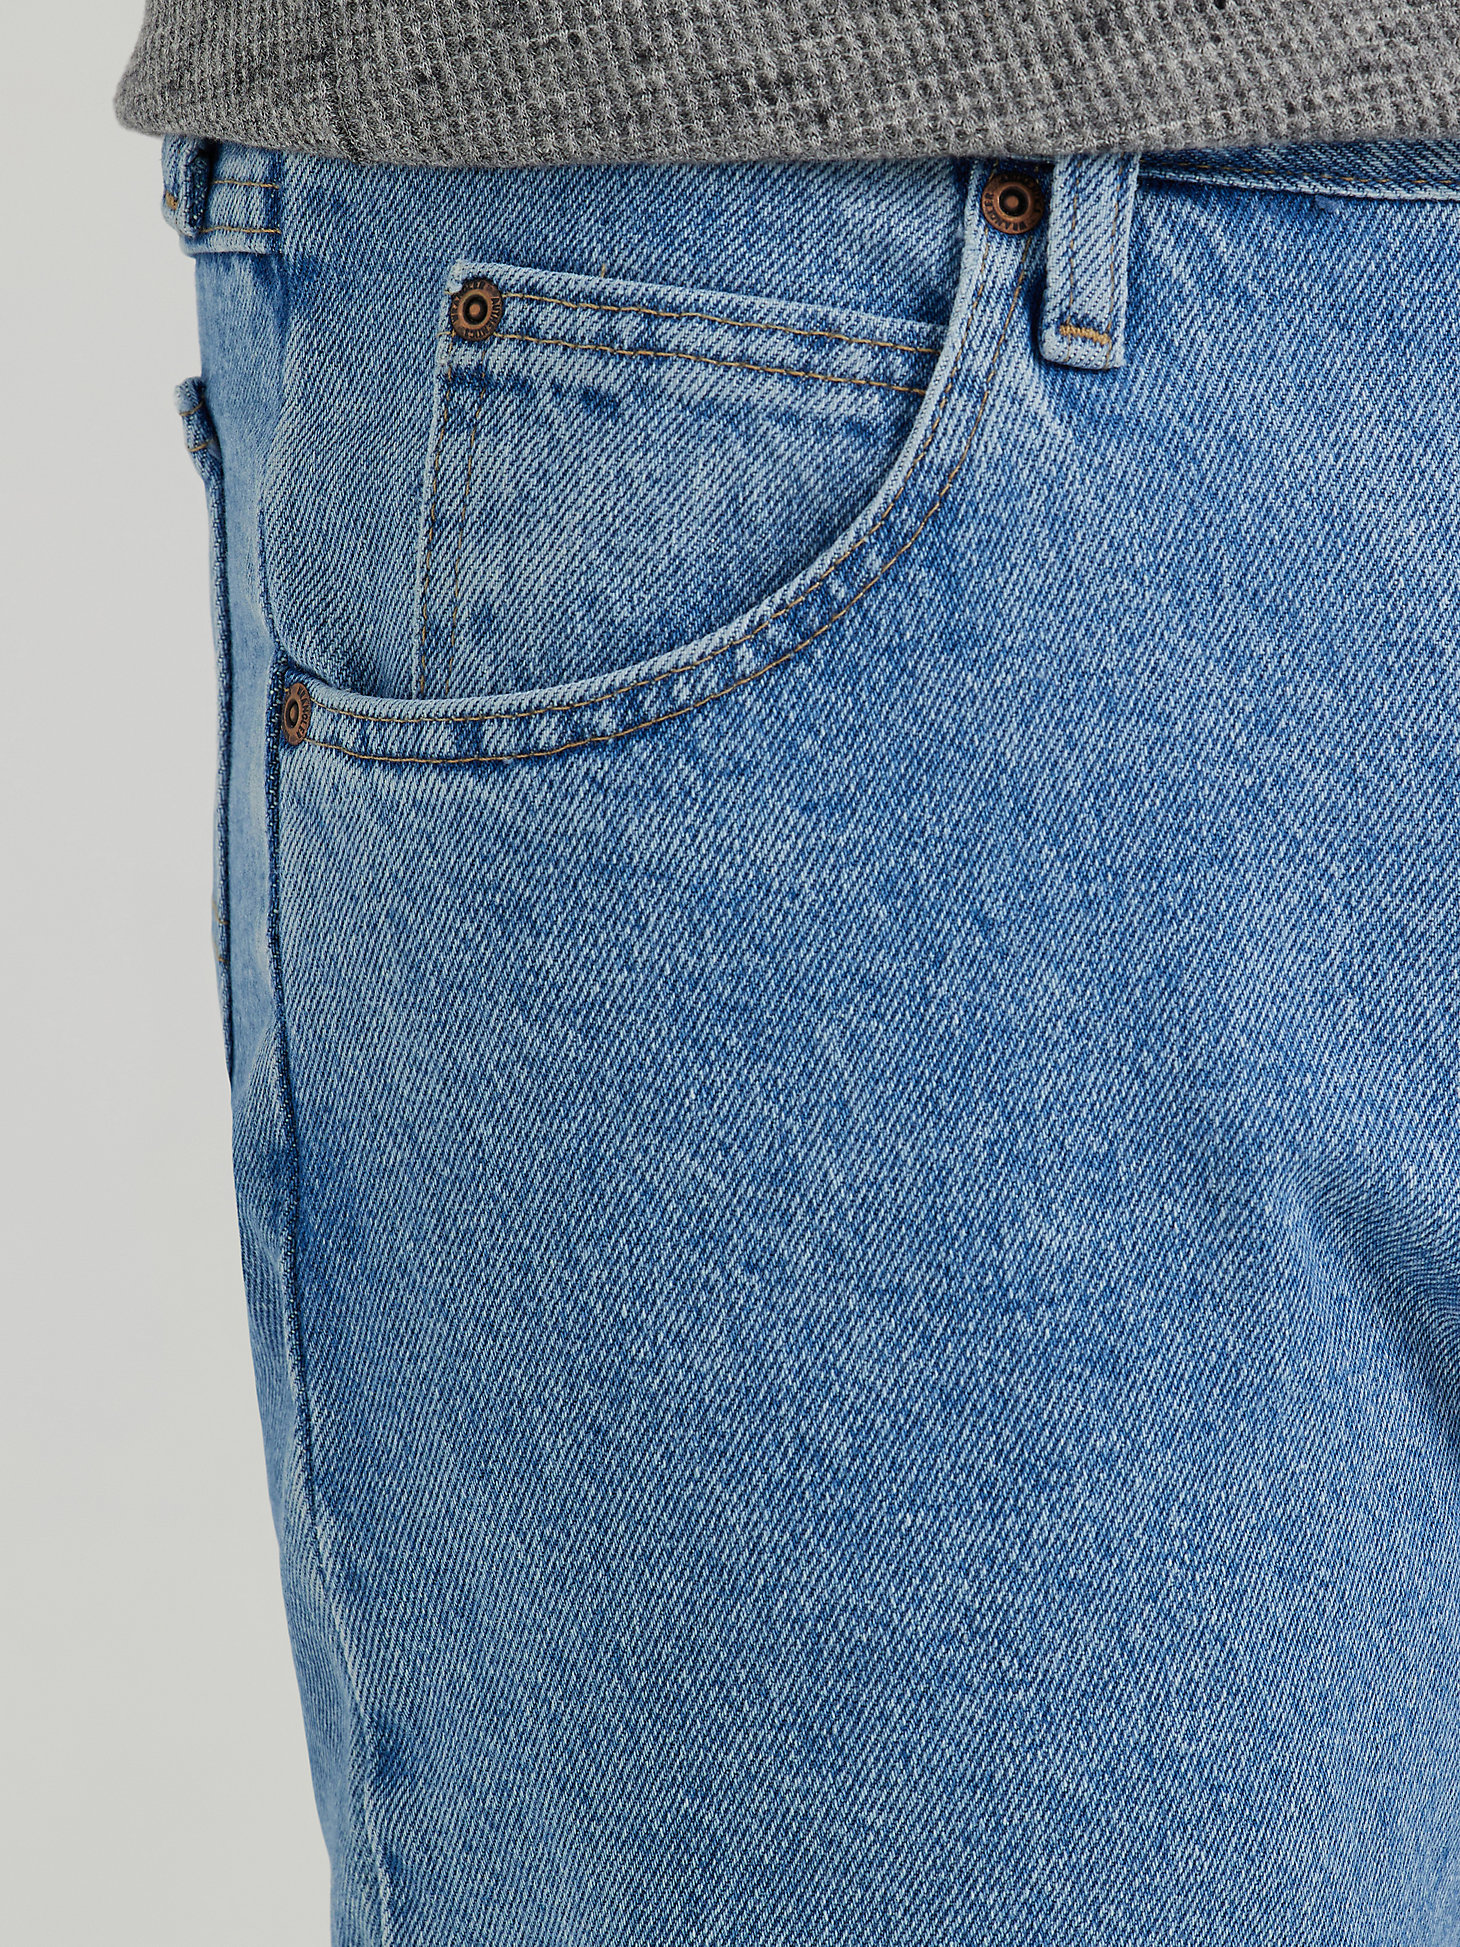 Men's Wrangler Authentics® Regular Fit Cotton Jean in Light Stonewash alternative view 4